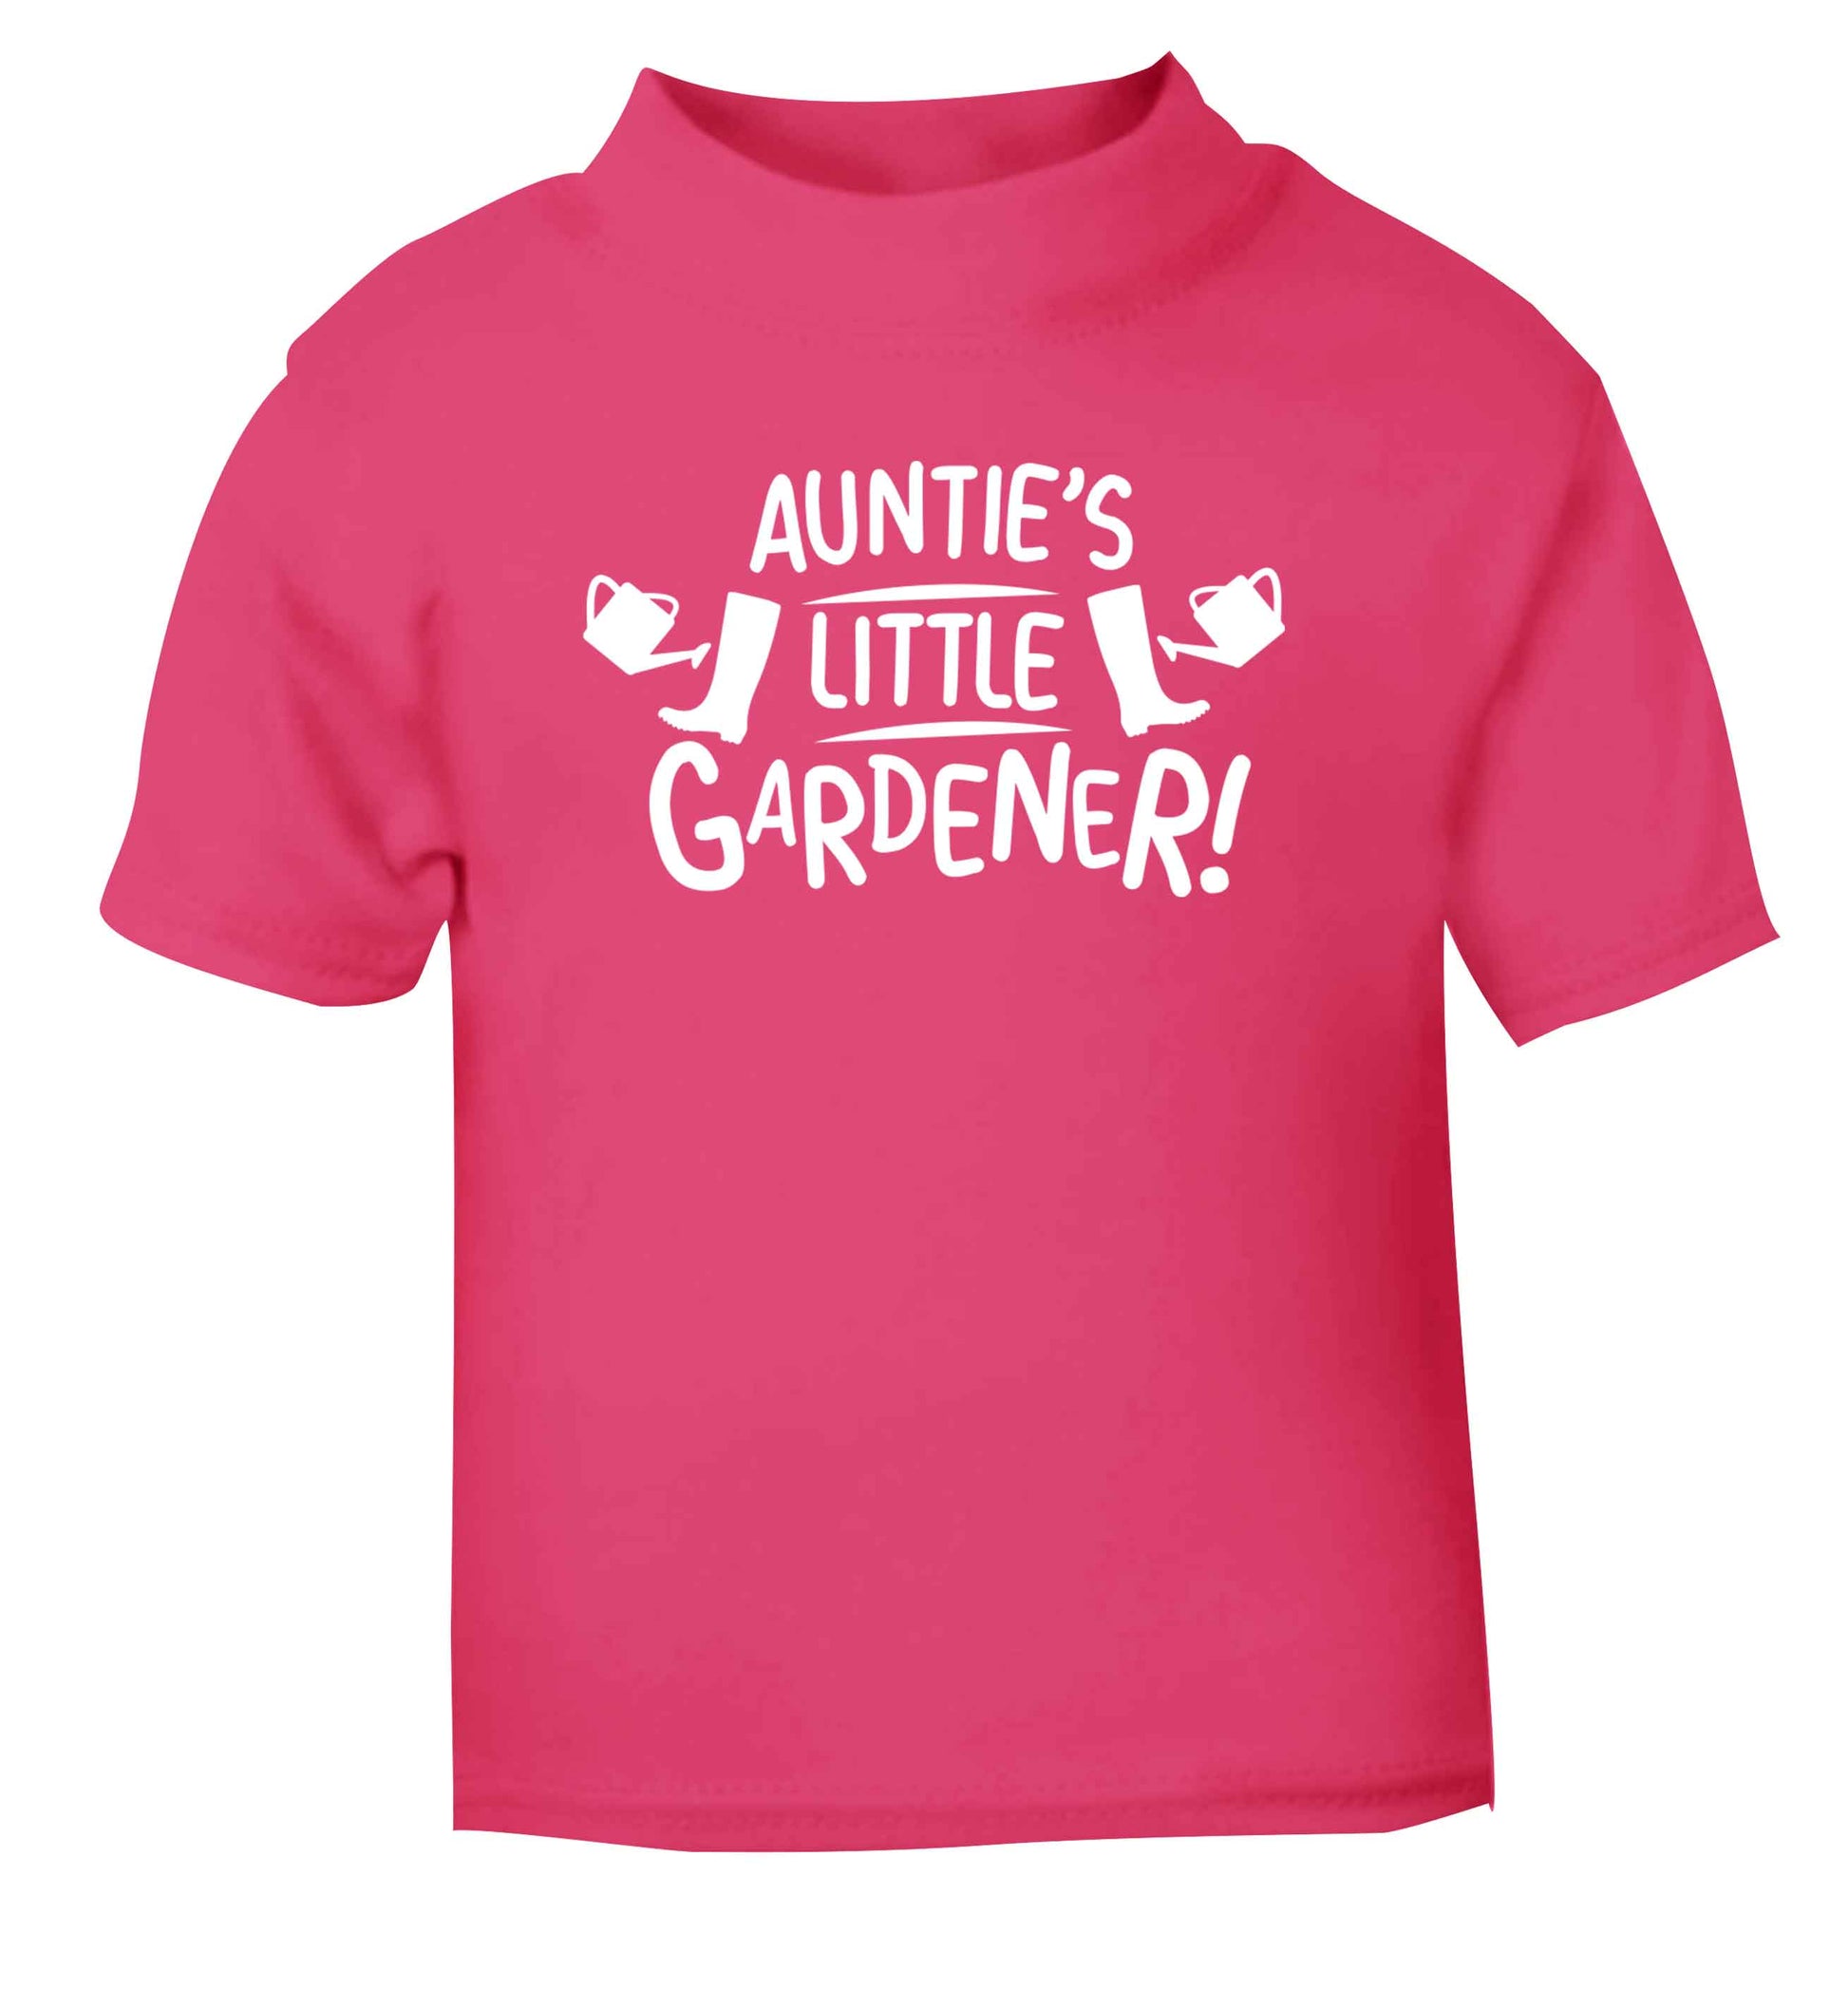 Auntie's little gardener pink Baby Toddler Tshirt 2 Years